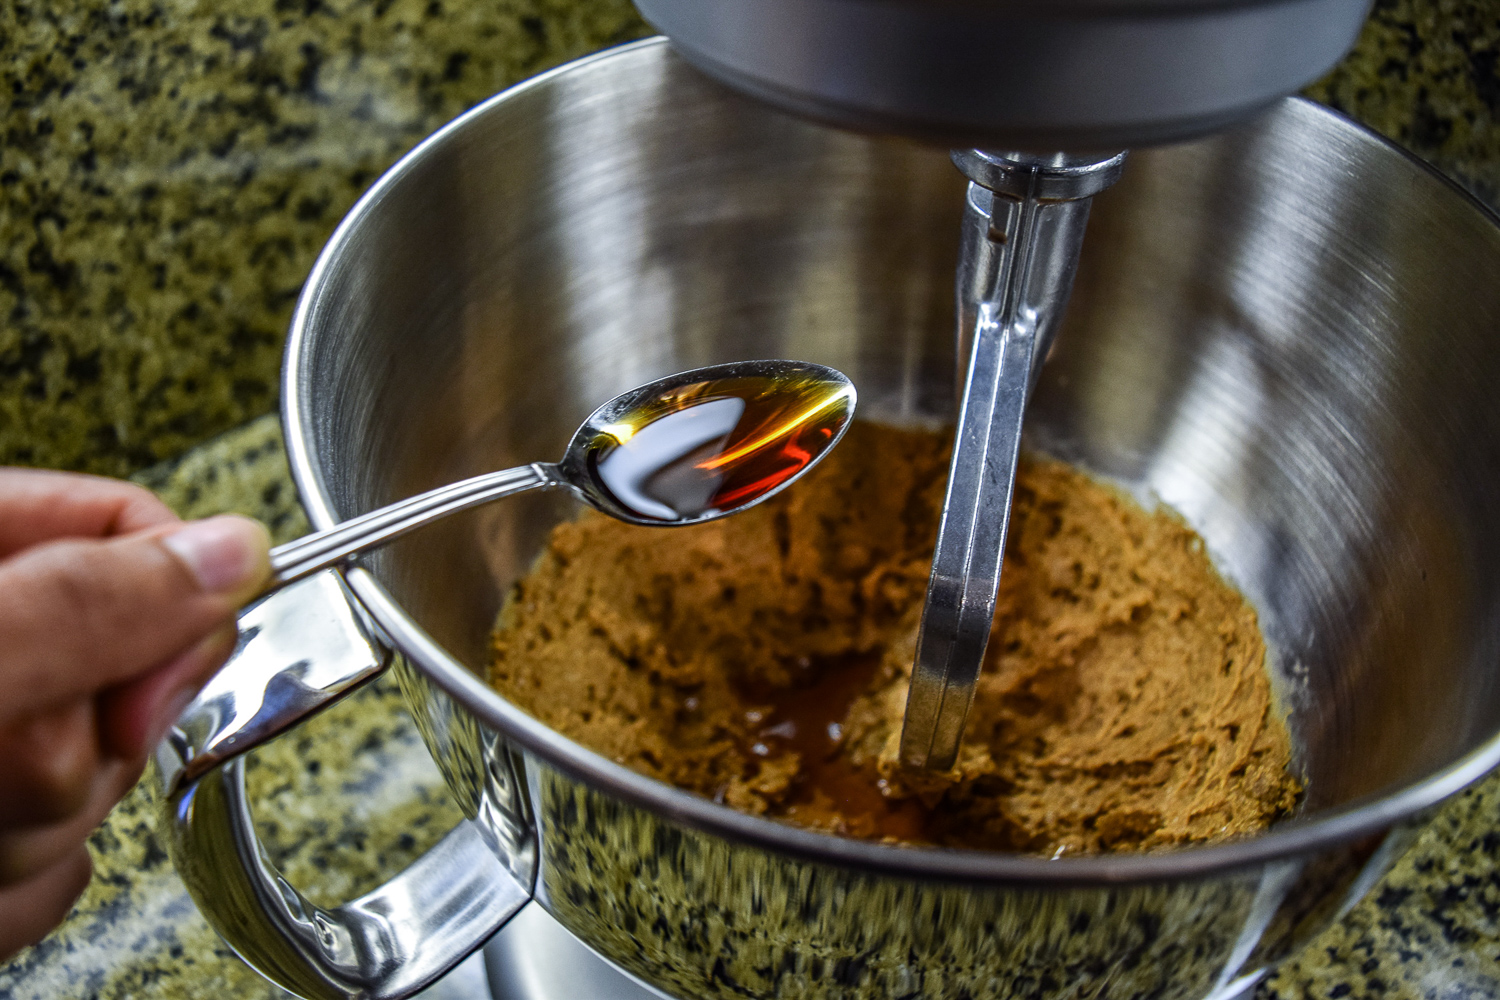 Adding the vanilla extract to the KitchenAid Mixer bowl